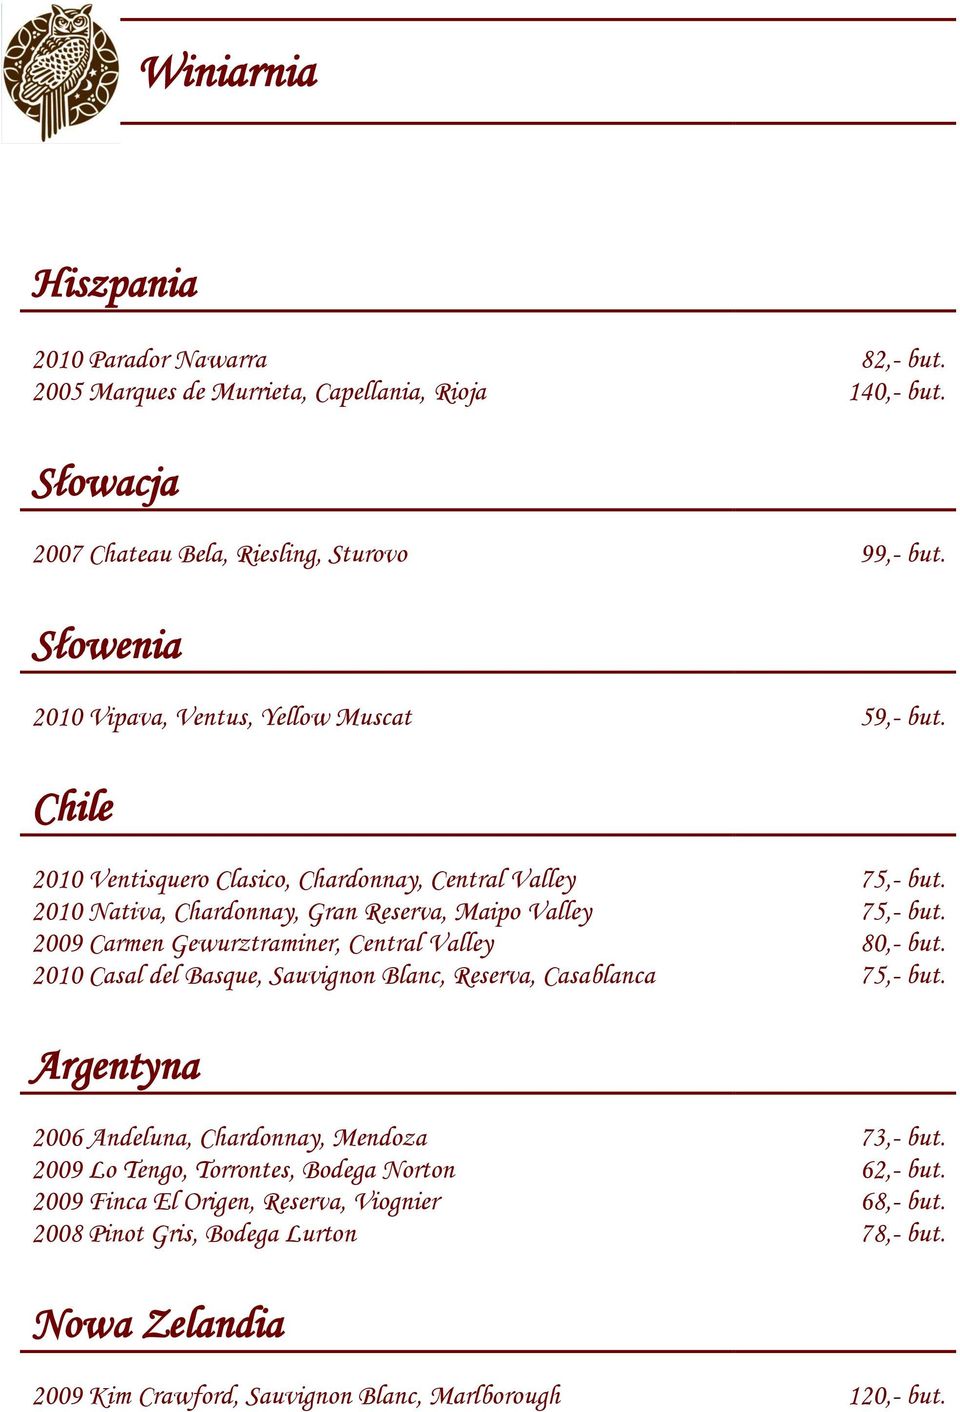 2010 Nativa, Chardonnay, Gran Reserva, Maipo Valley 75,- but. 2009 Carmen Gewurztraminer, Central Valley 80,- but.